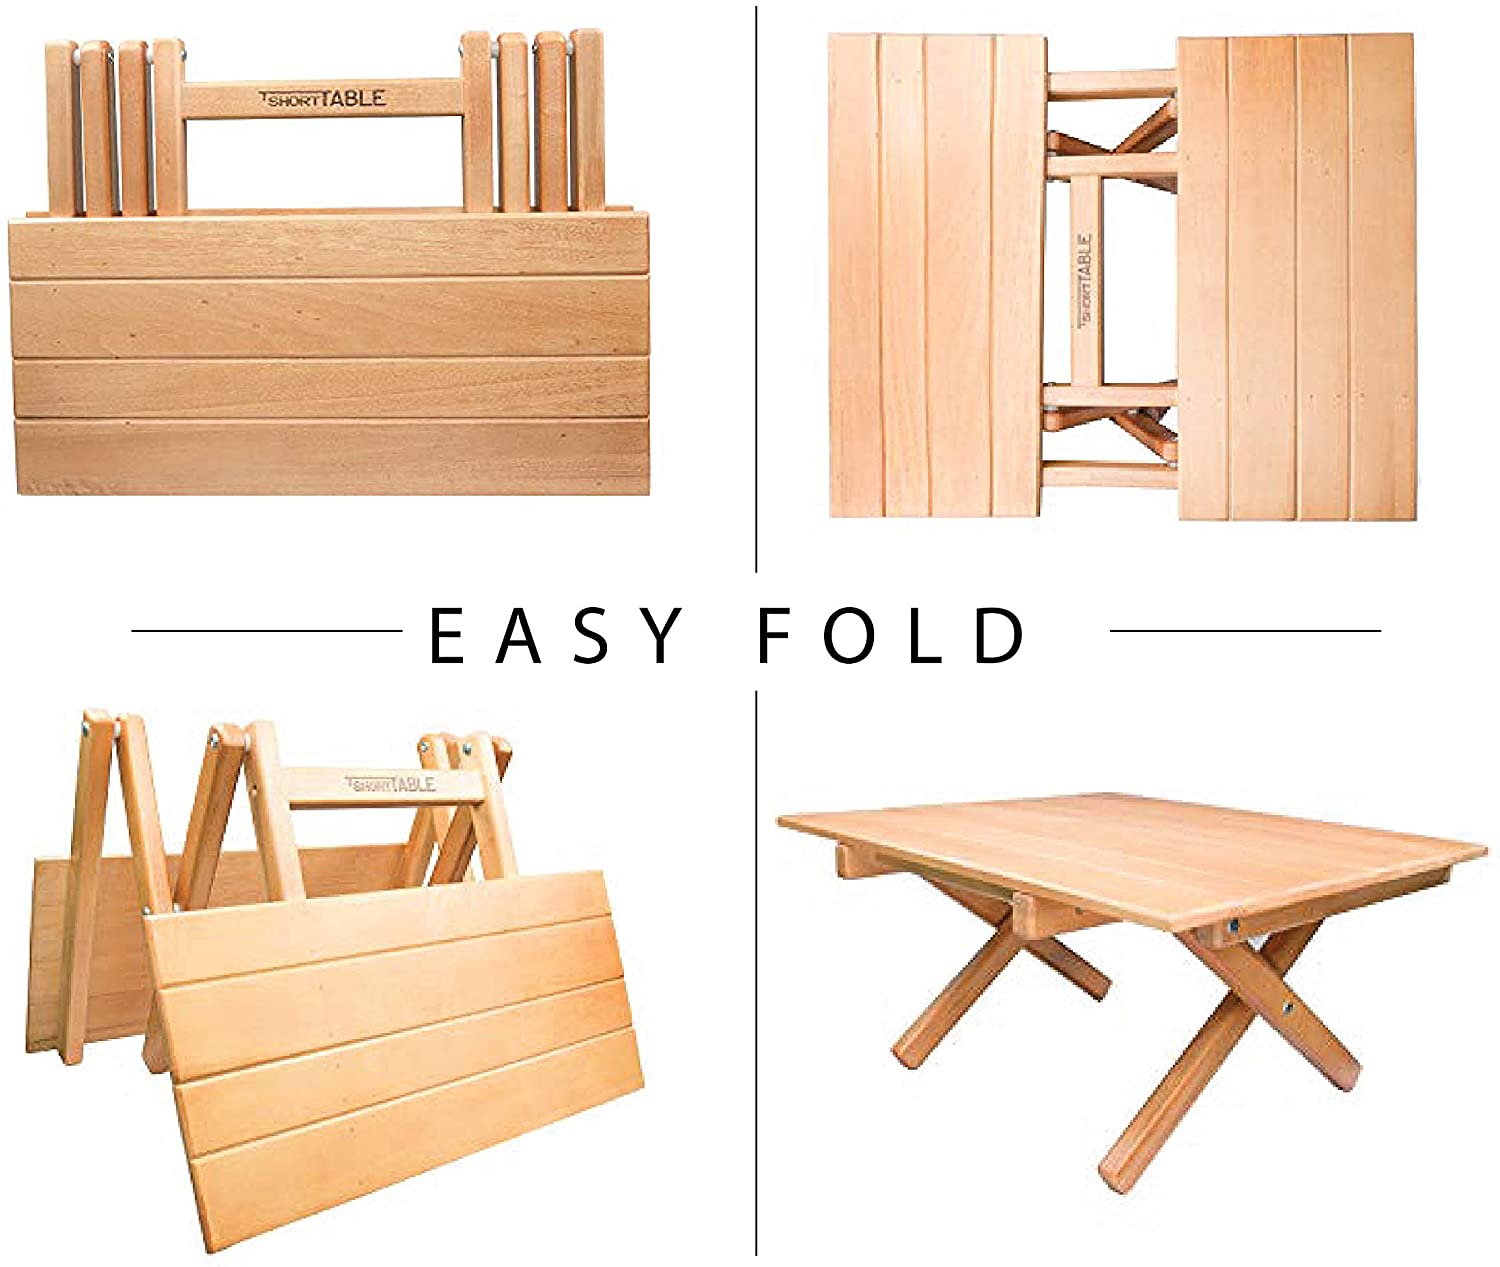 43810 - Simple Setup Short Table All-Purpose Use and Portability USA